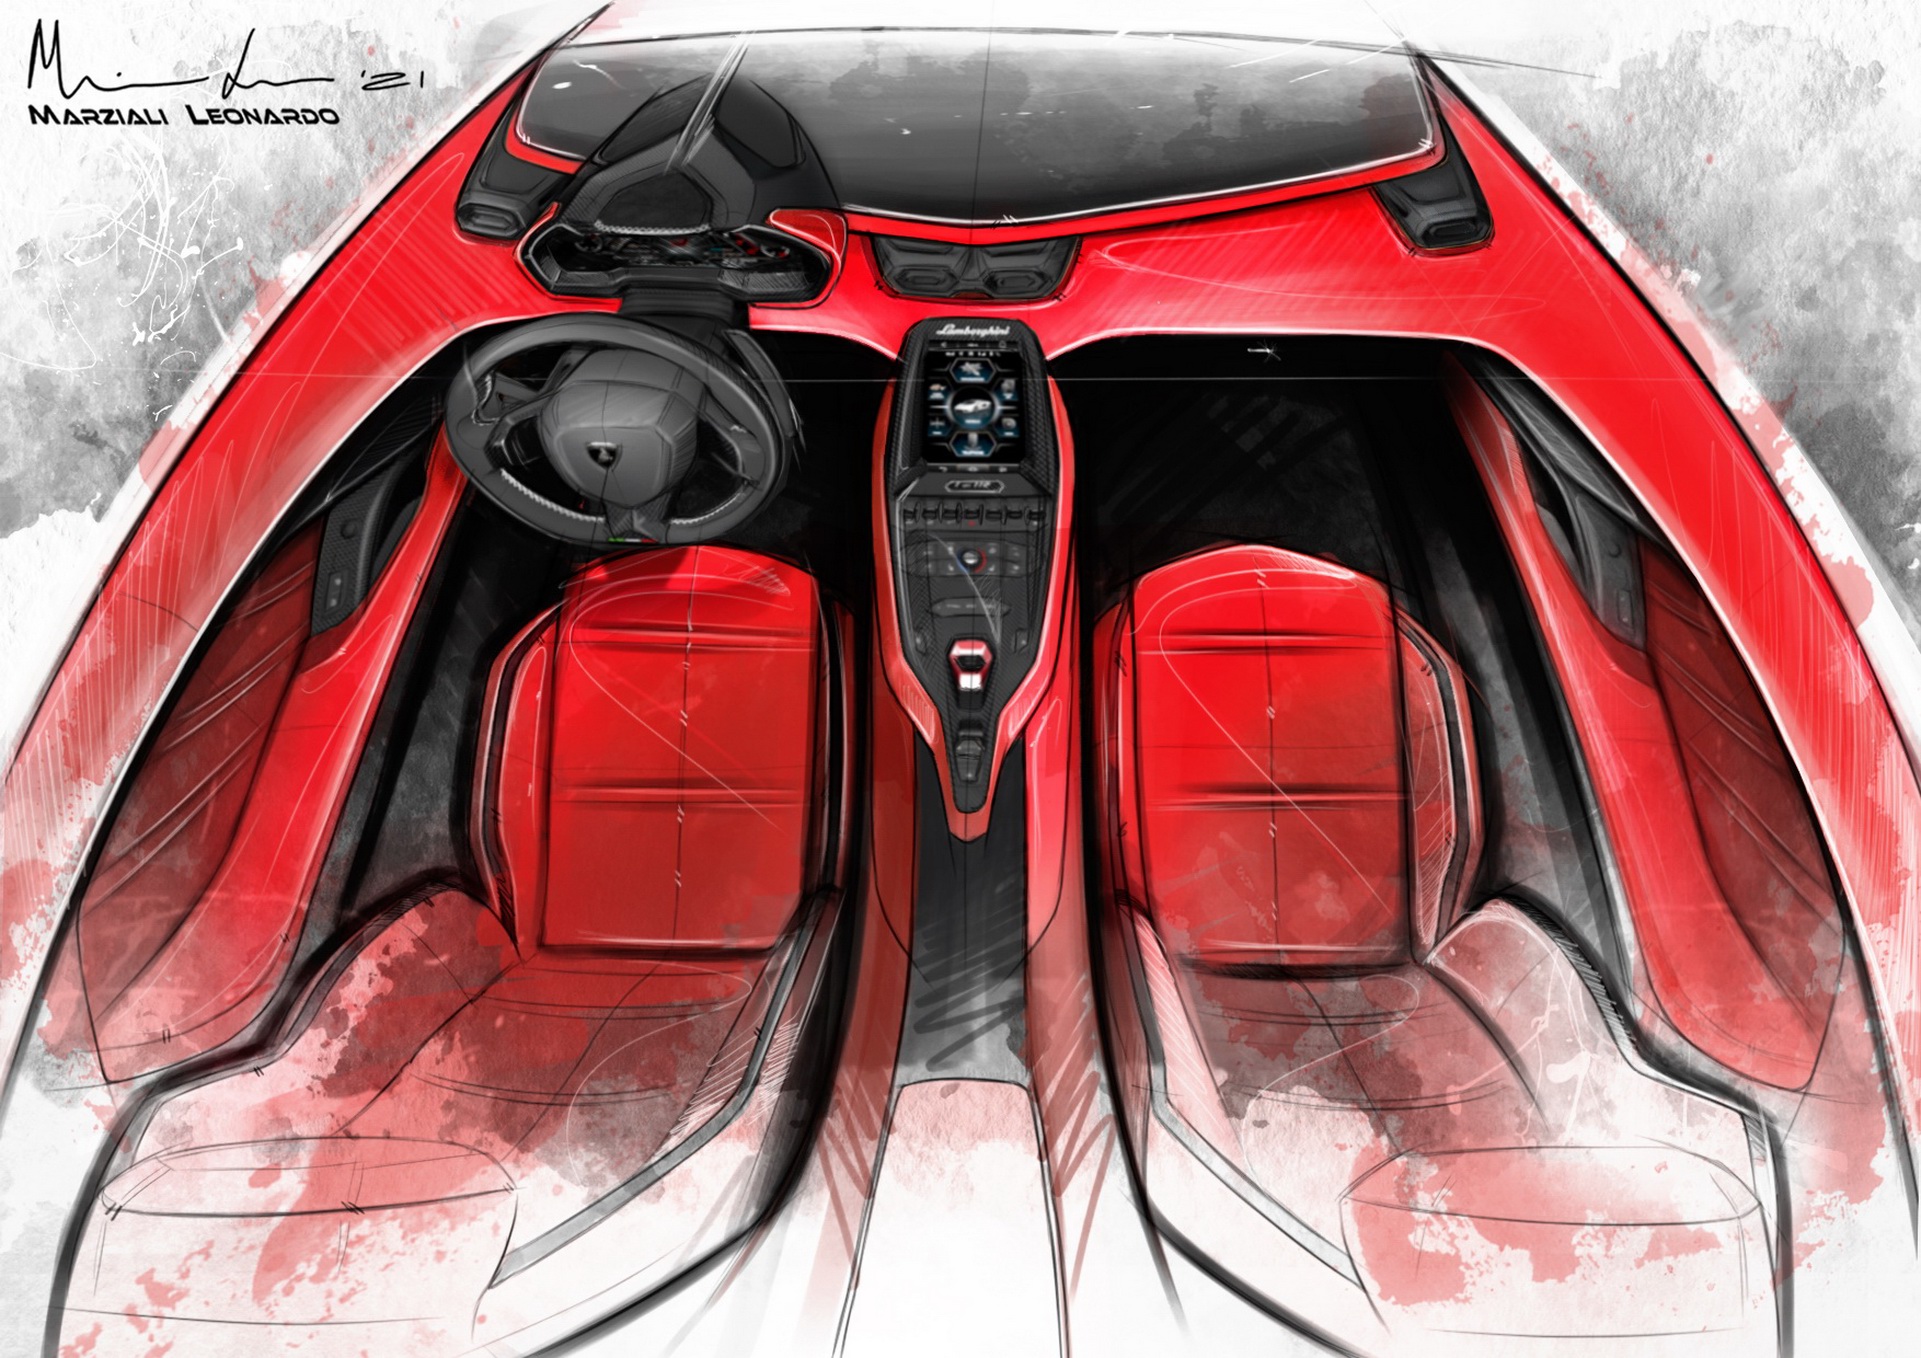 2022 Lamborghini Countach LPI 800-4 Design Sketch Wallpapers #131 of 142